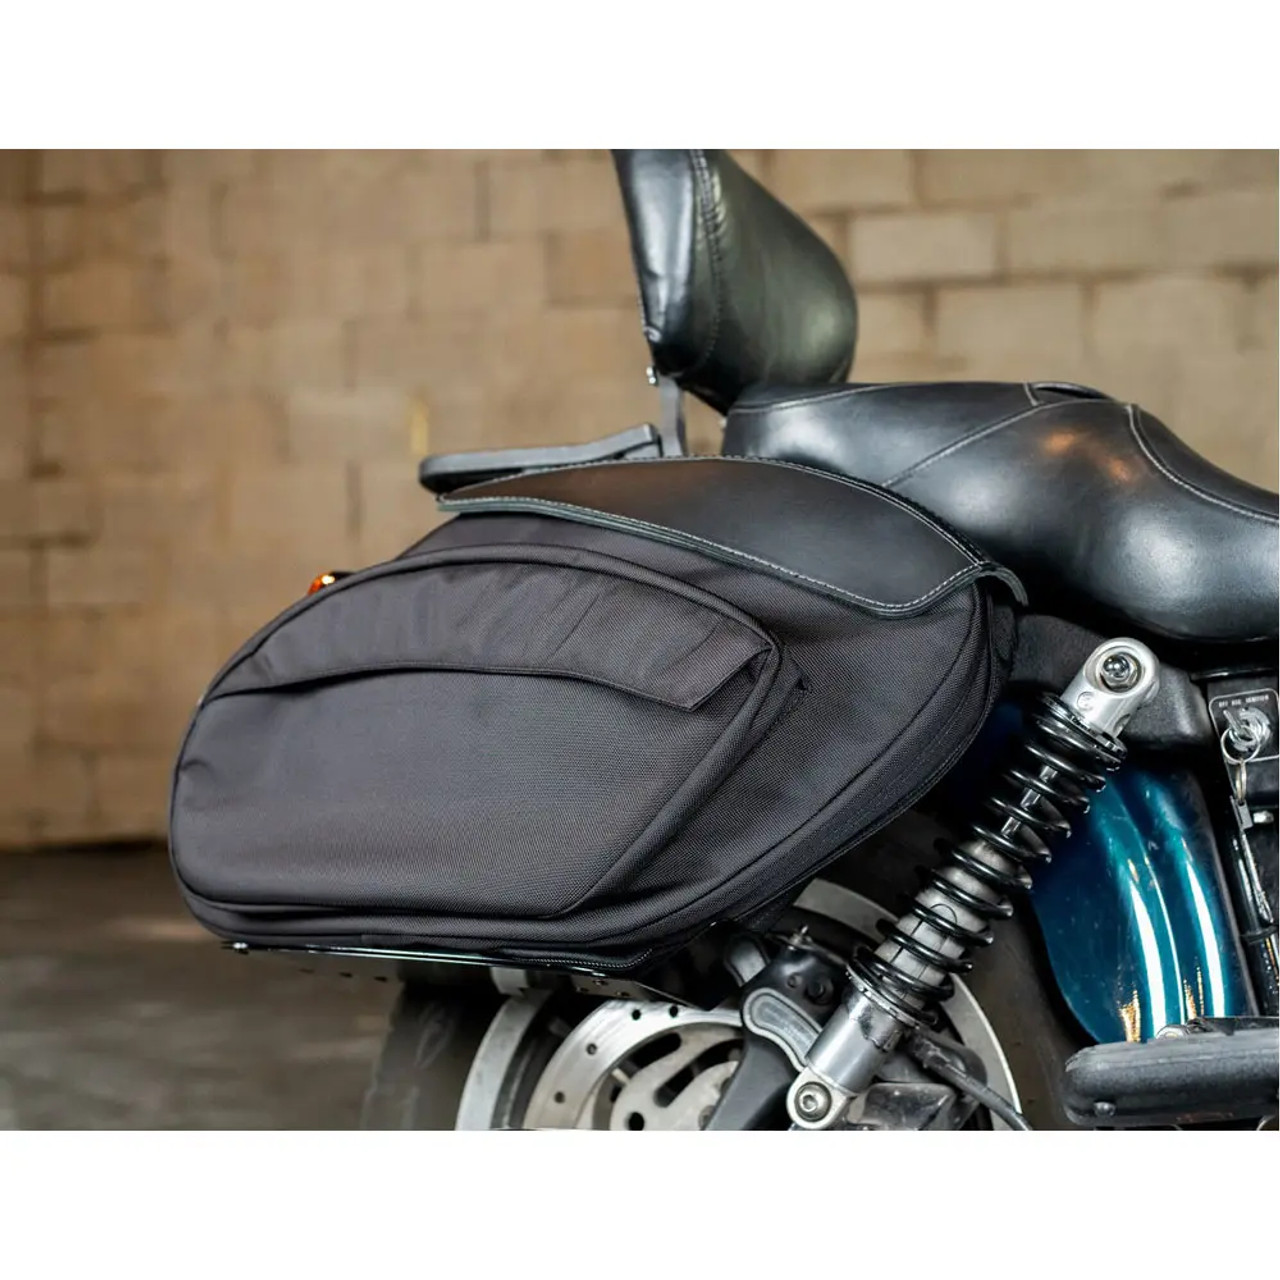 Saddlebags for Harley-Davidson®